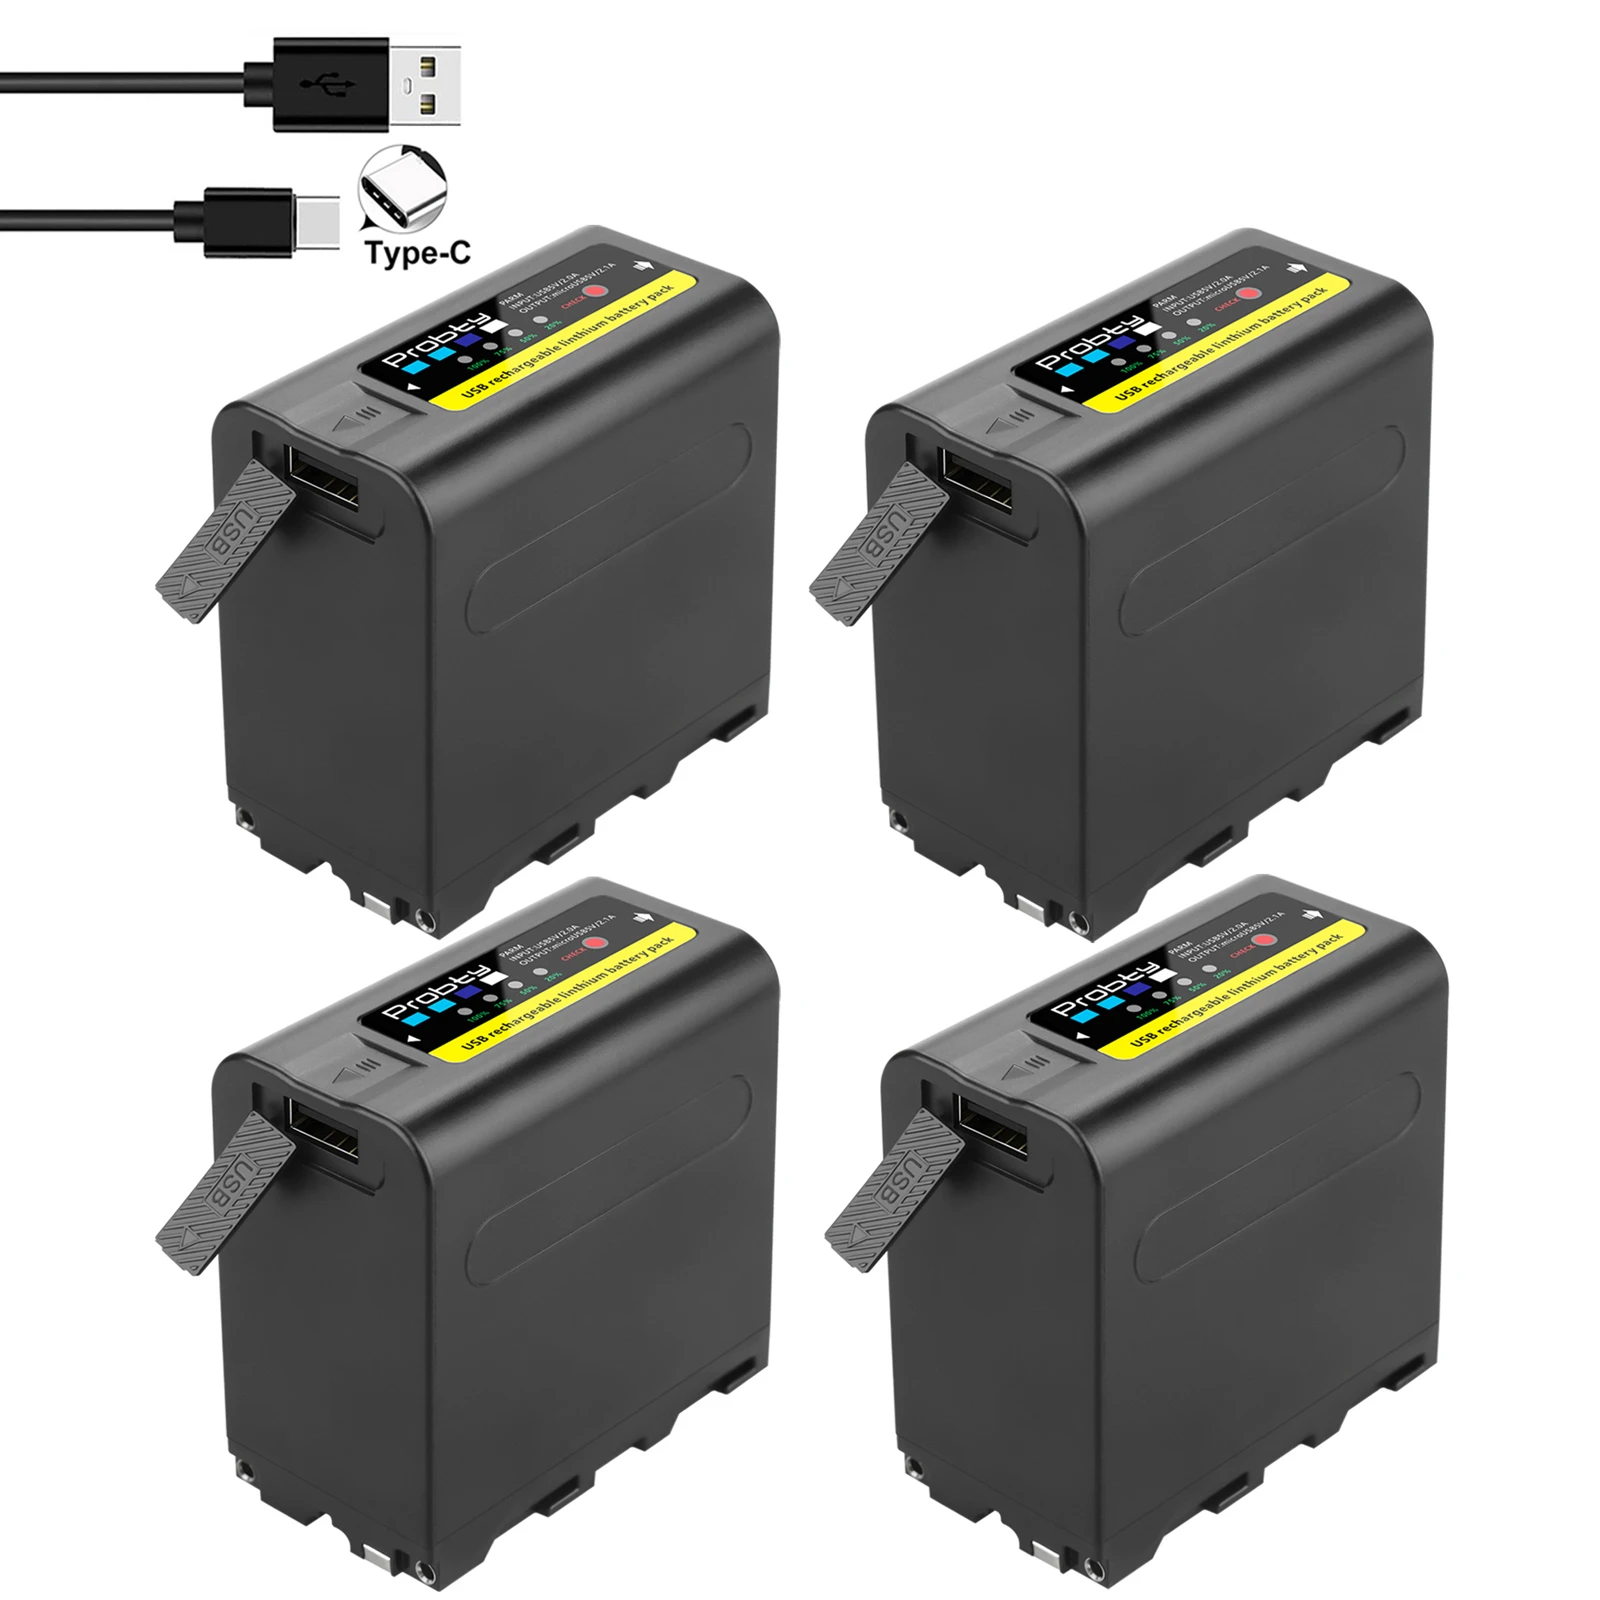 4Pcs USB Output 8800mAh NP-F970 Battery with LED Power Indicator for Sony NP-F970, NP-F975, NP-F960, NP-F950, NP-F930, DCR, DSR